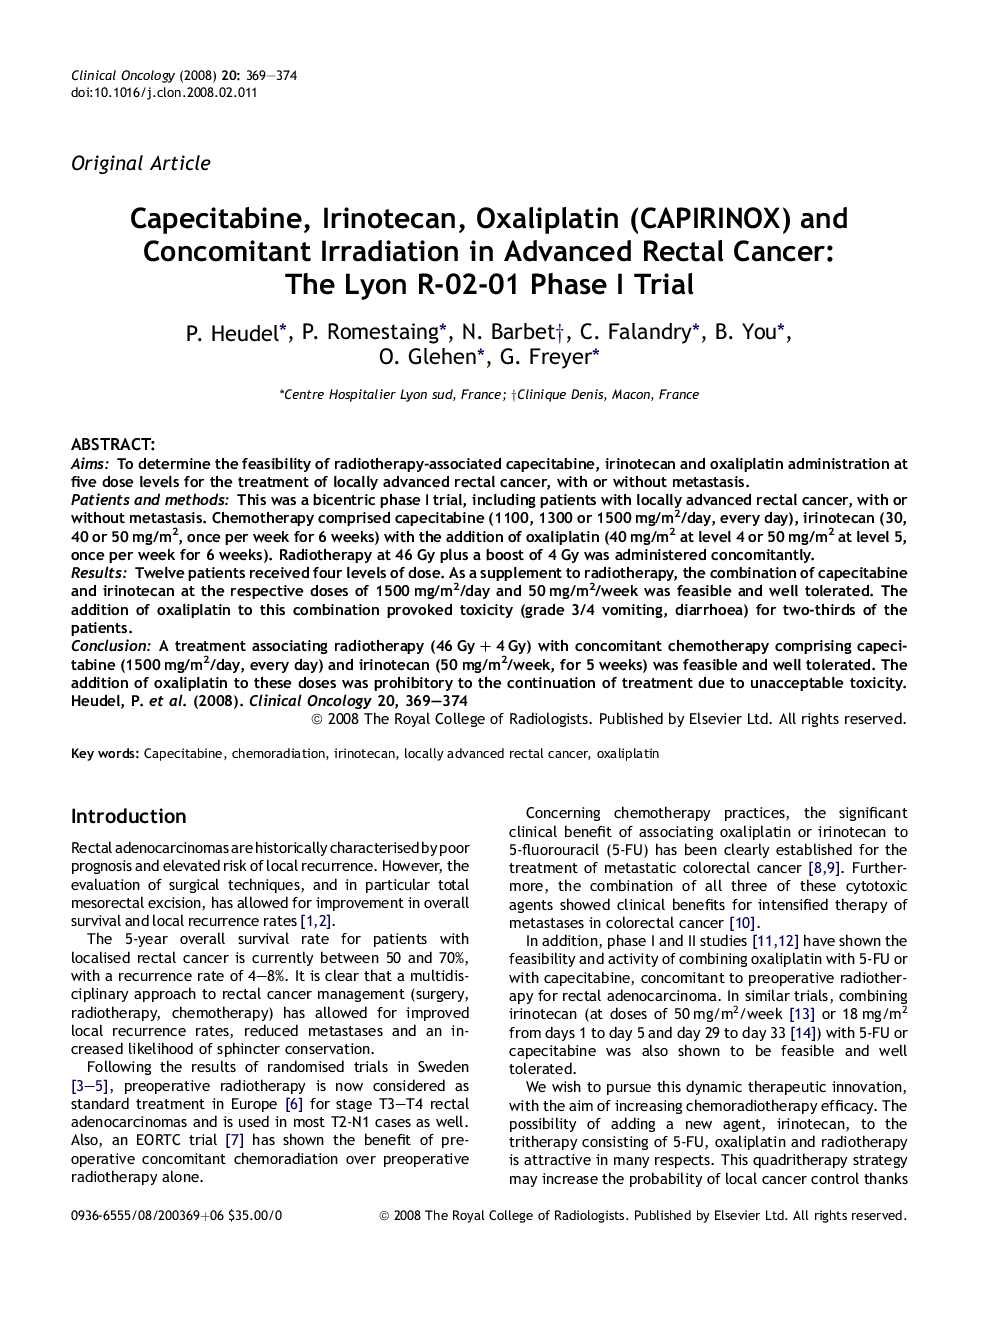 Capecitabine, Irinotecan, Oxaliplatin (CAPIRINOX) and Concomitant Irradiation in Advanced Rectal Cancer: The Lyon R-02-01 Phase I Trial